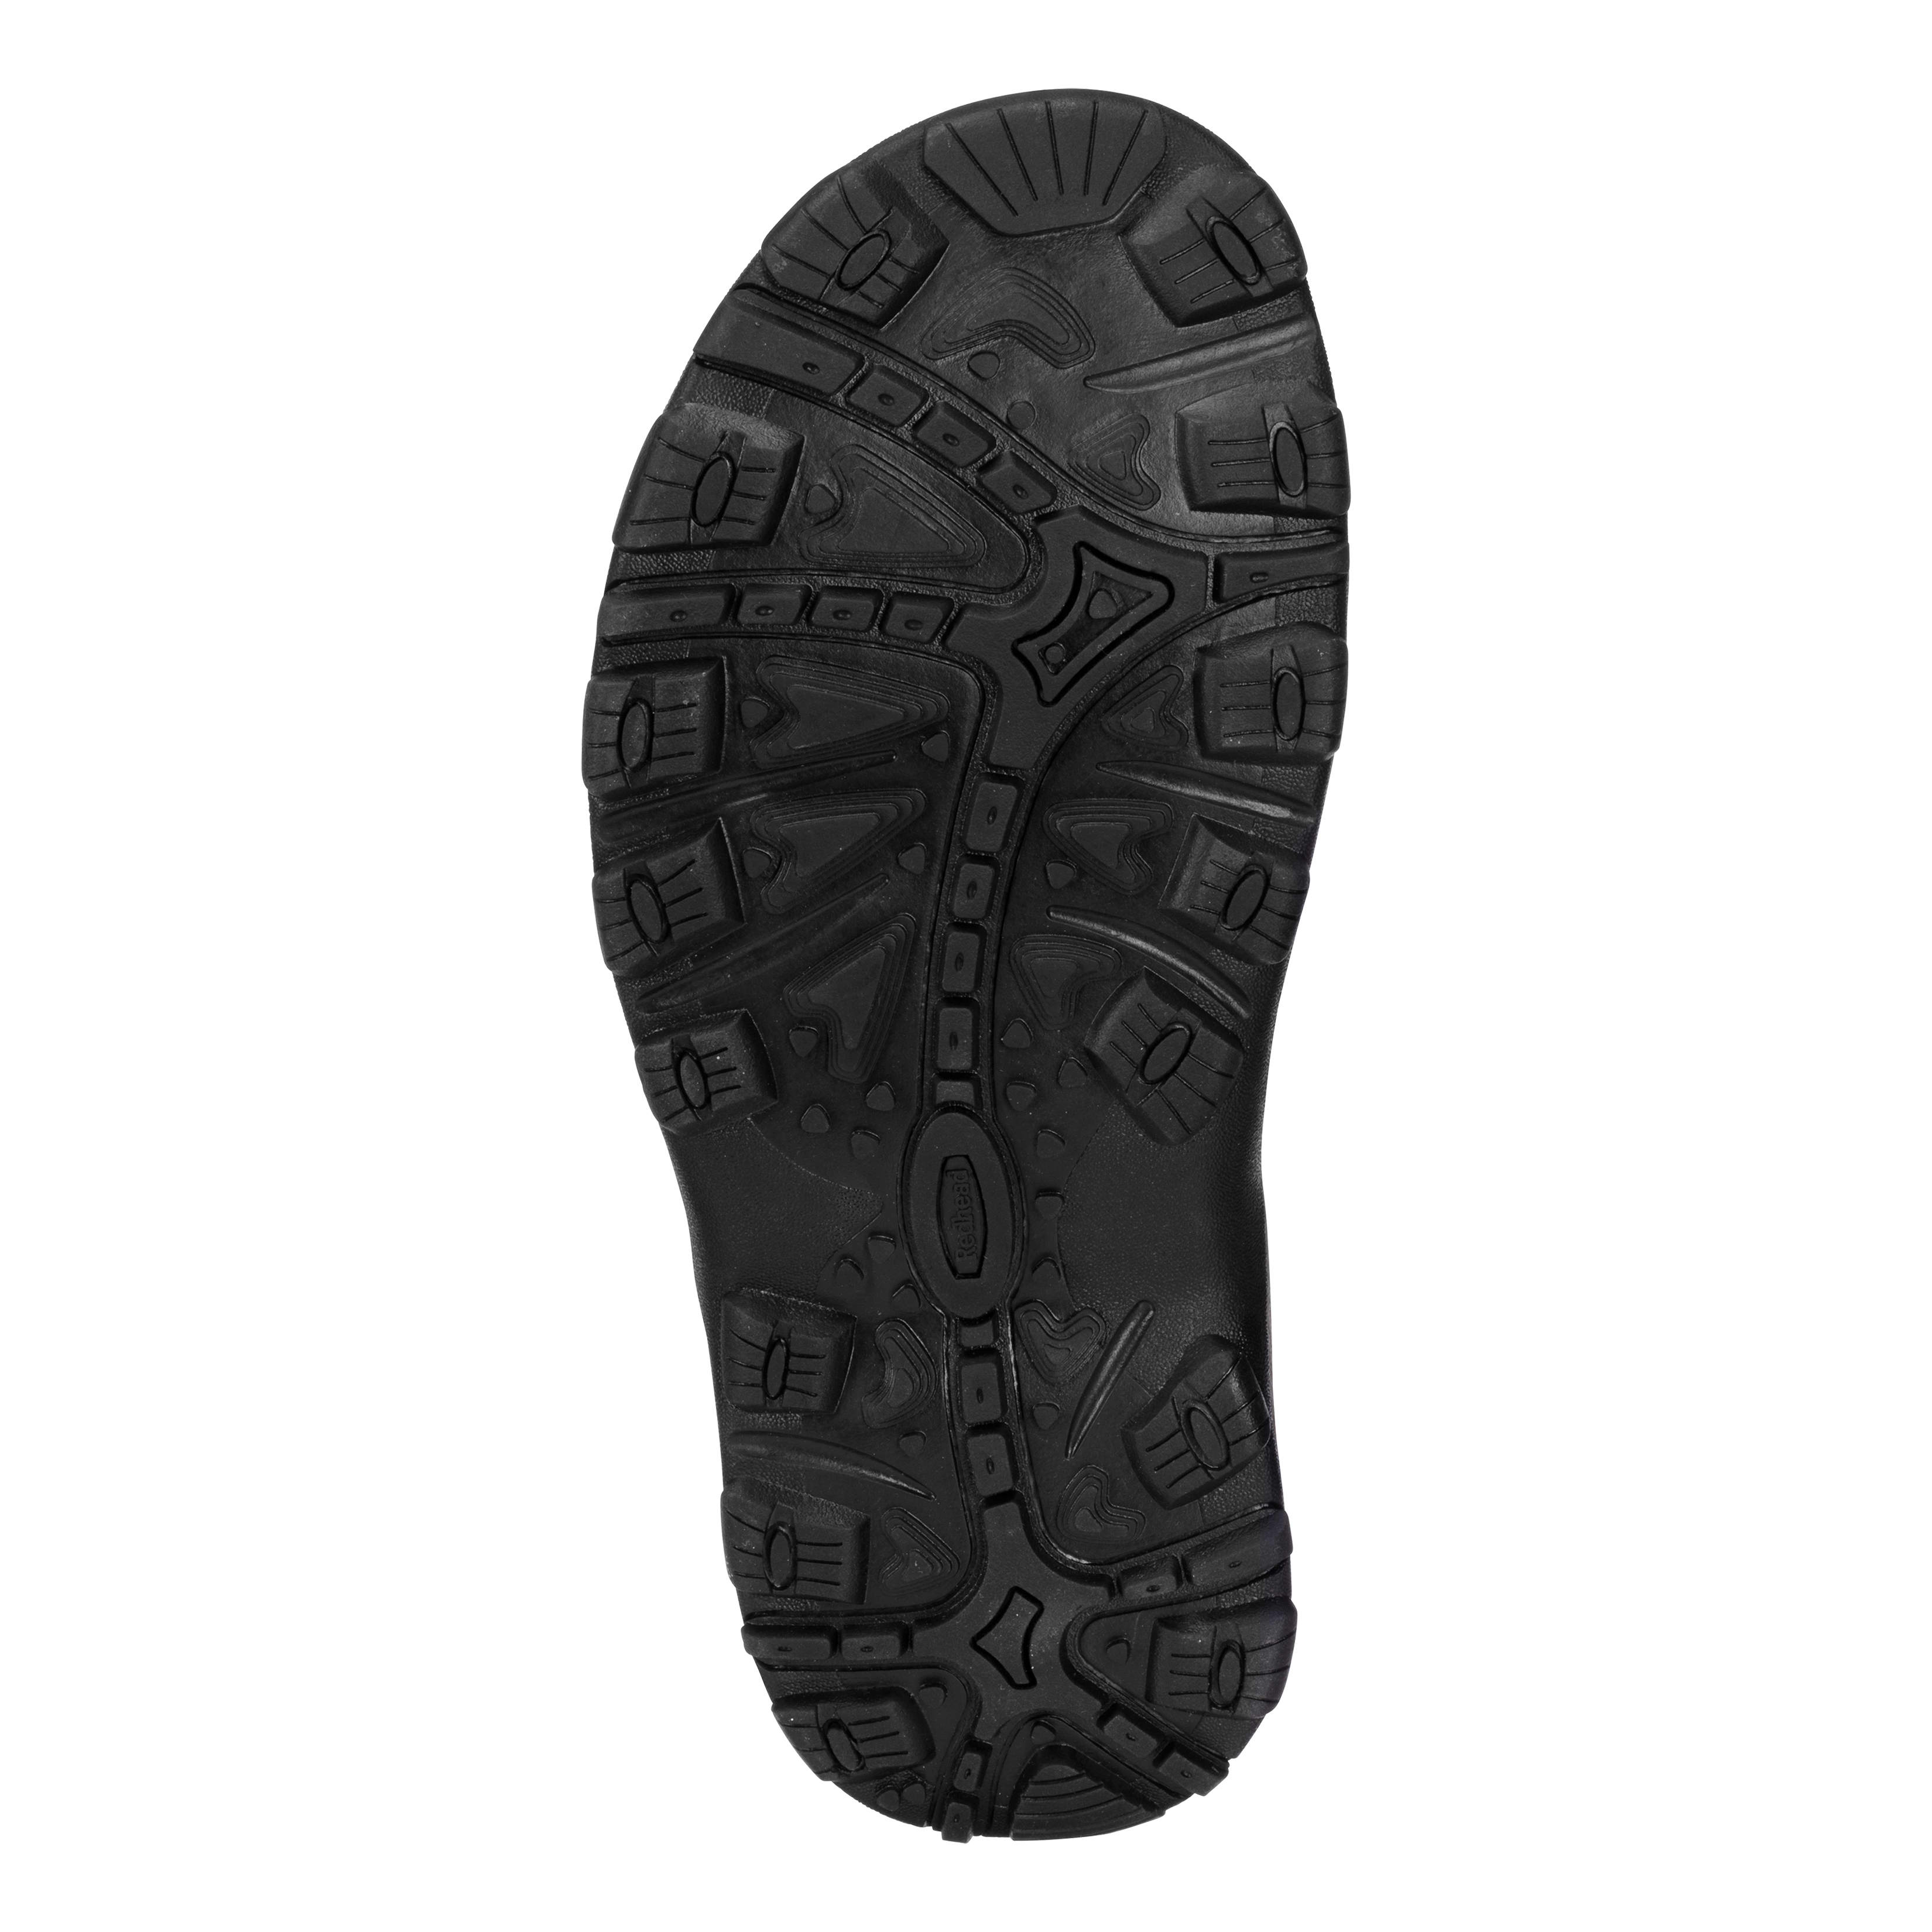 RedHead® Men’s Finley River II Sandals - sole